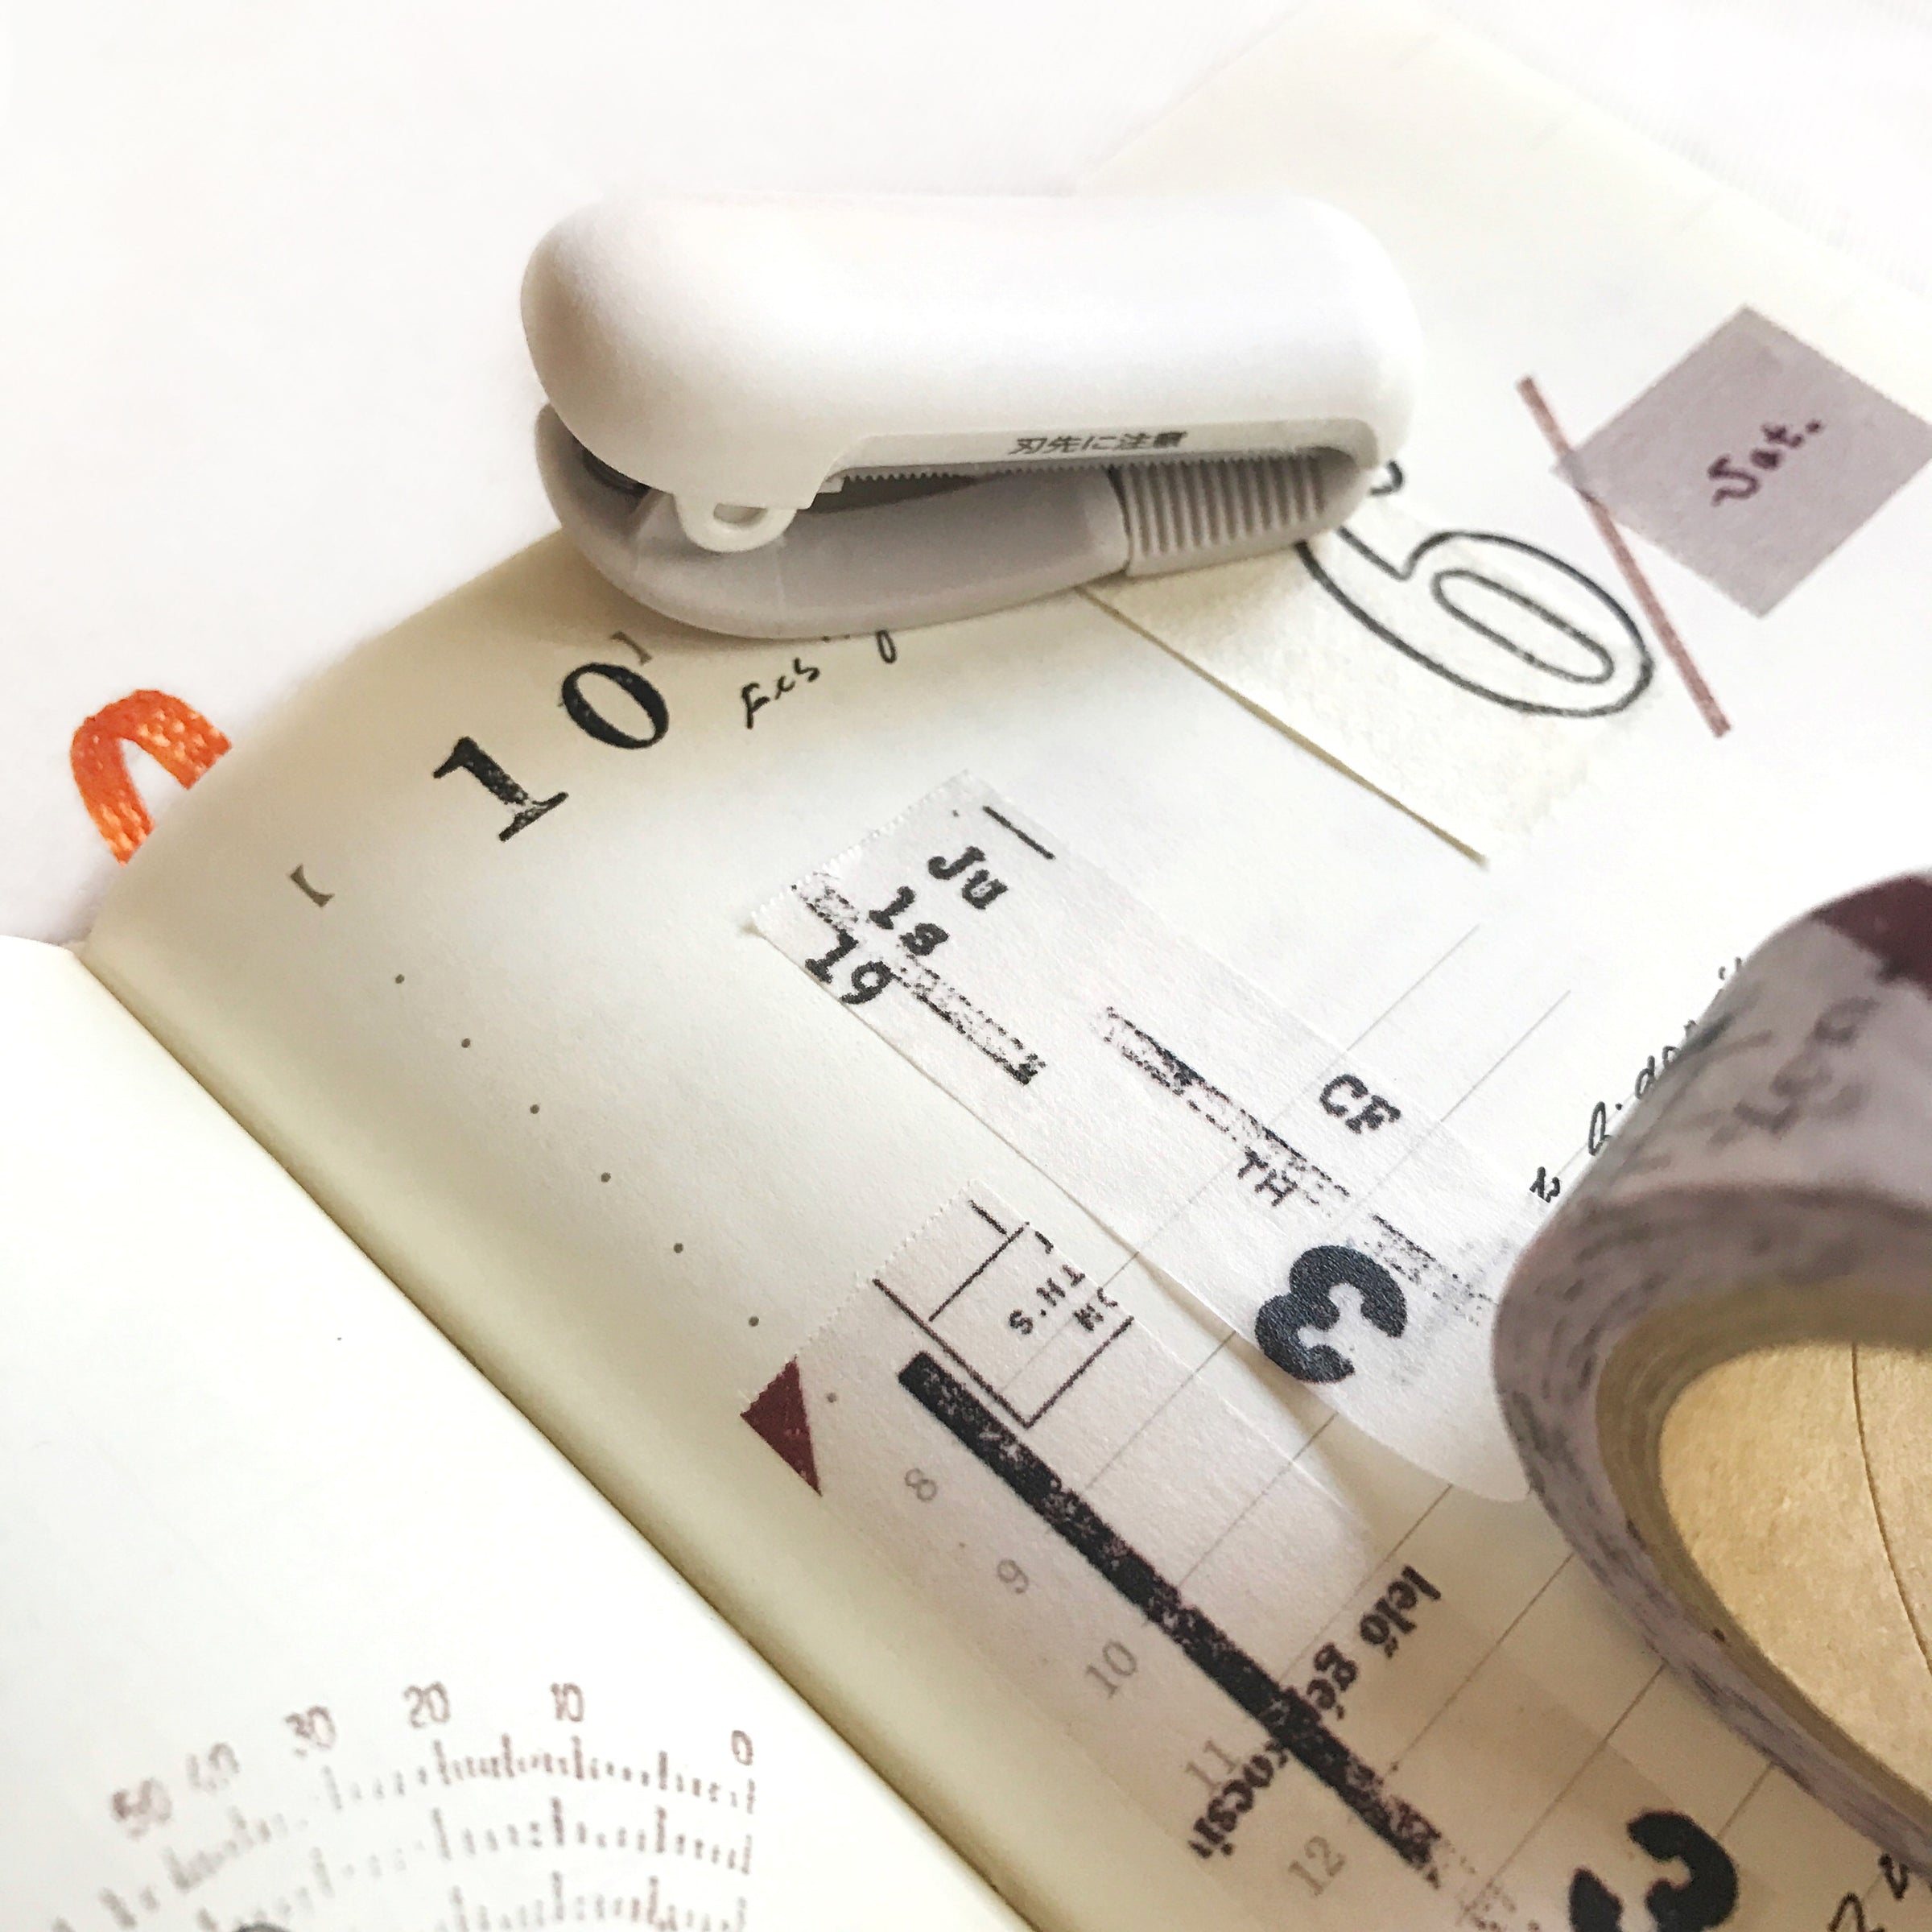 Karu-Cut Washi Tape Cutter – TACTO STUDIO